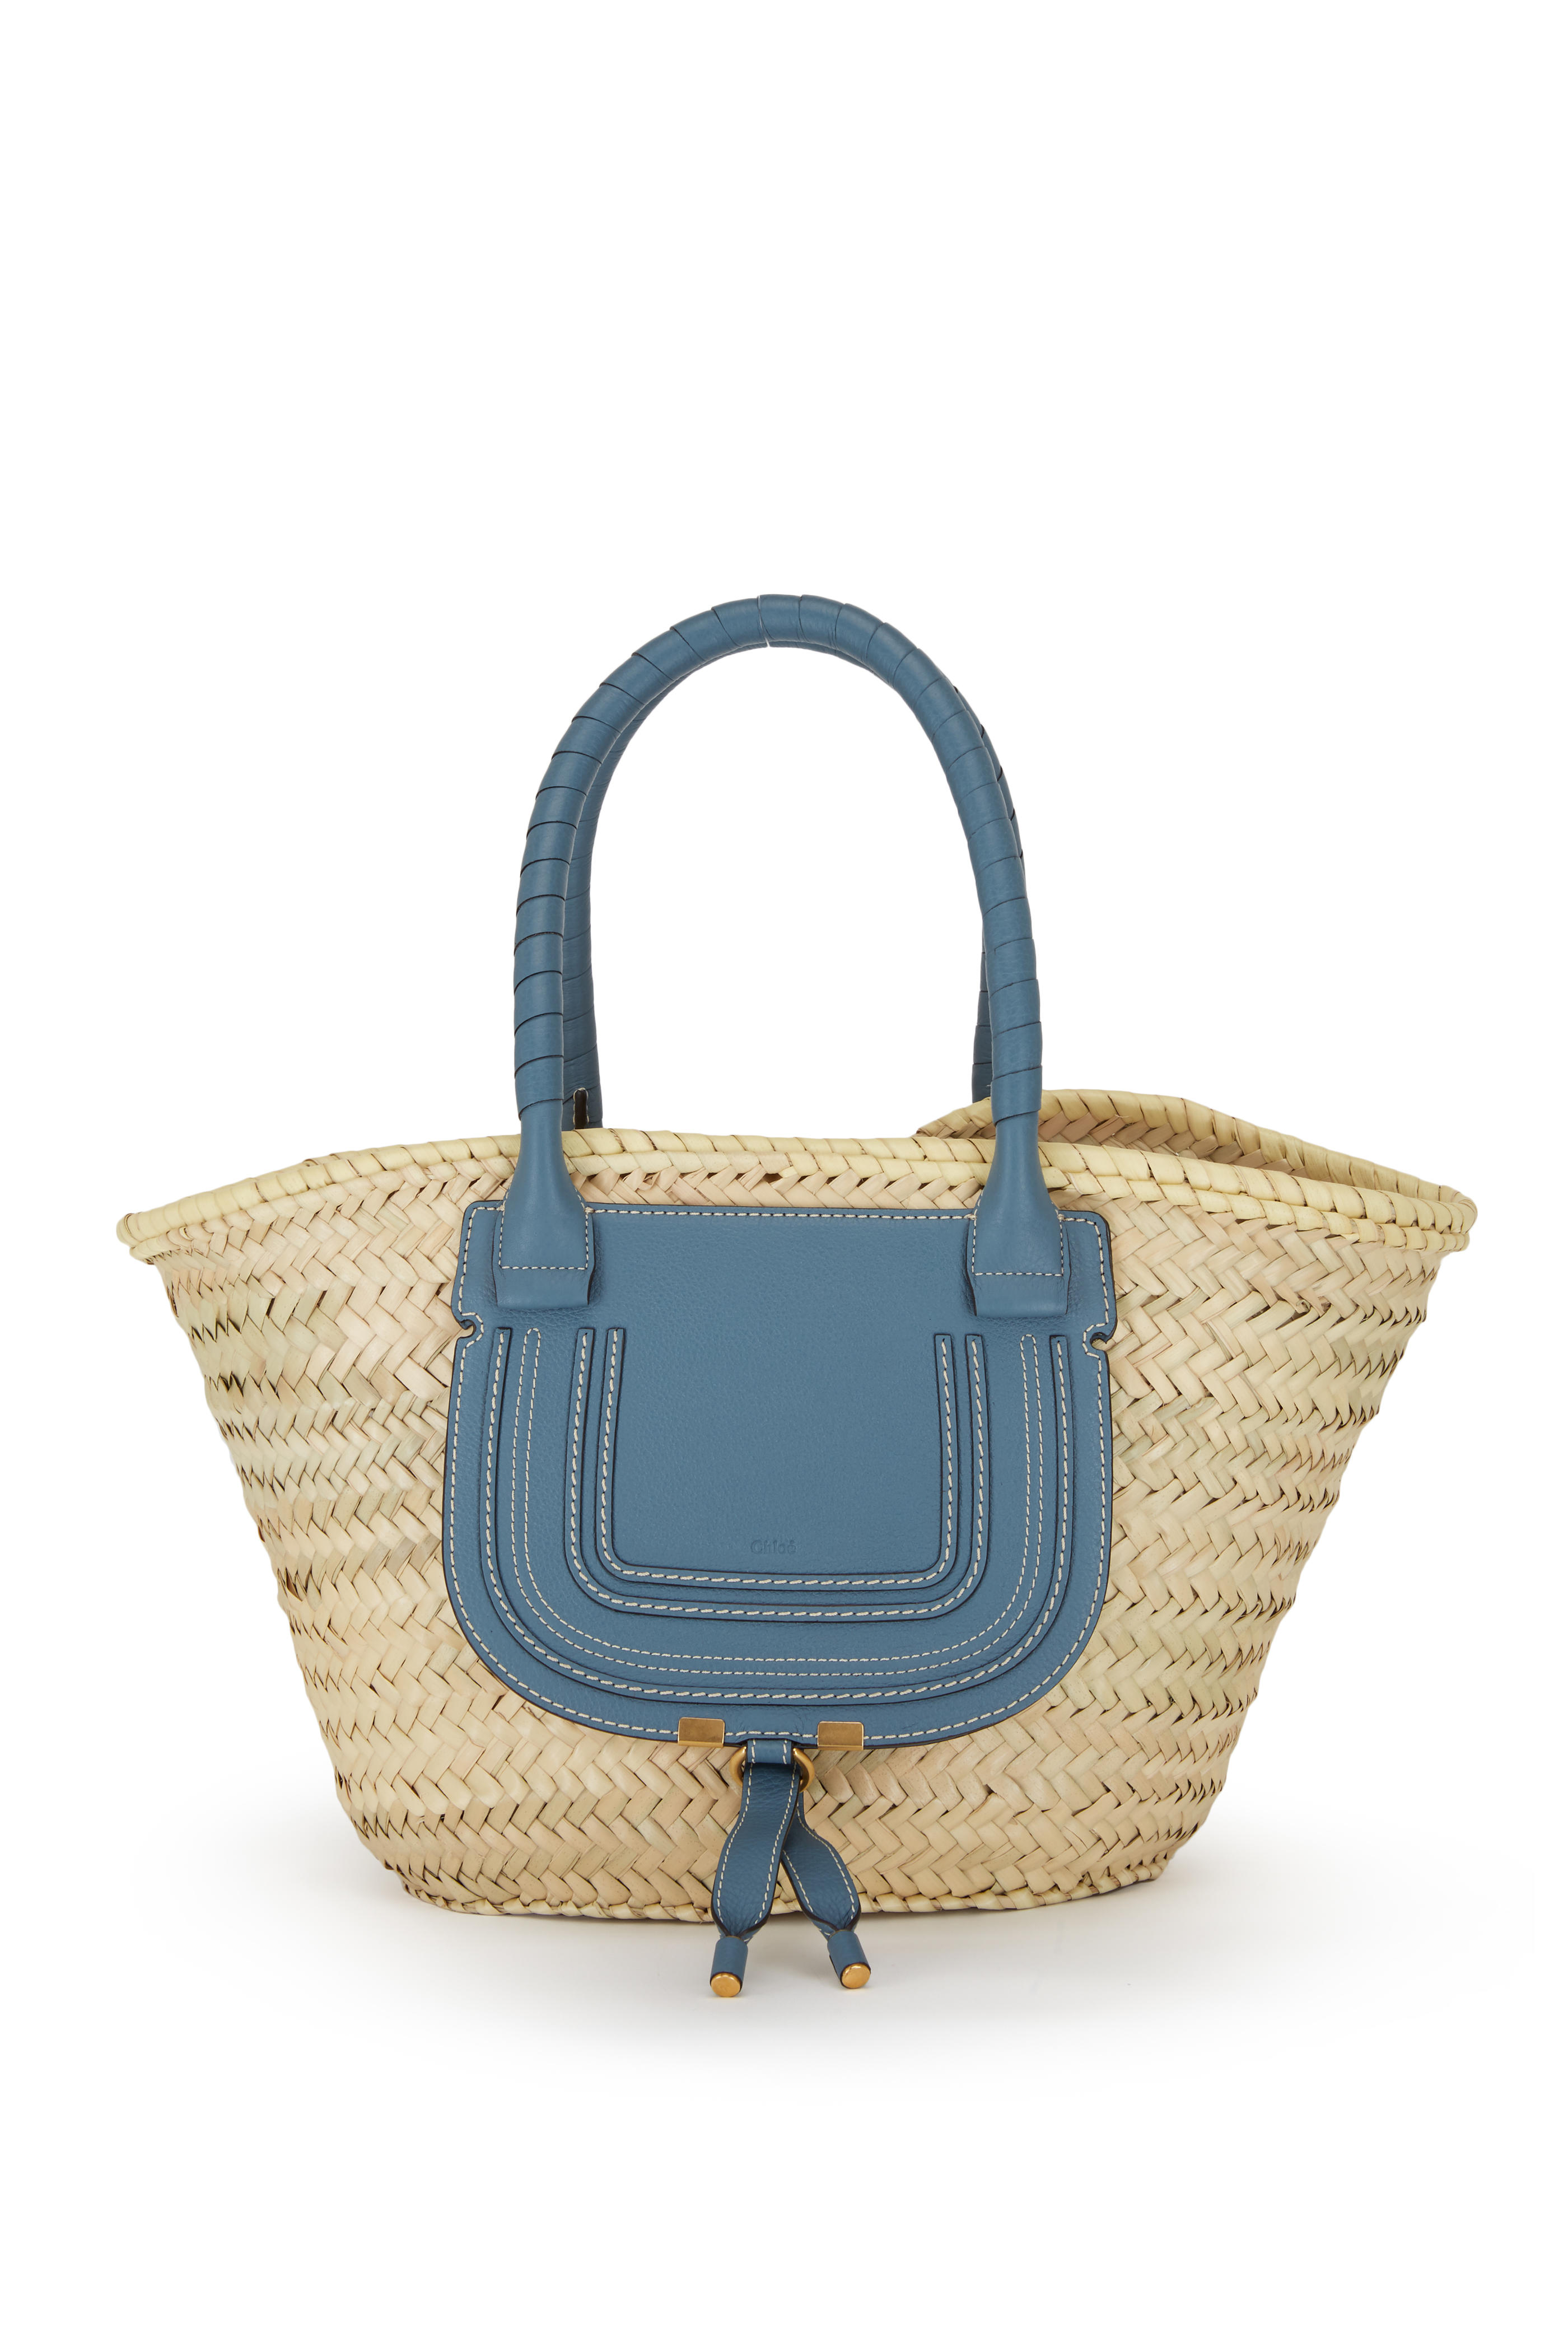 Chloé - Marcie Natural & Mirage Blue Medium Basket Bag